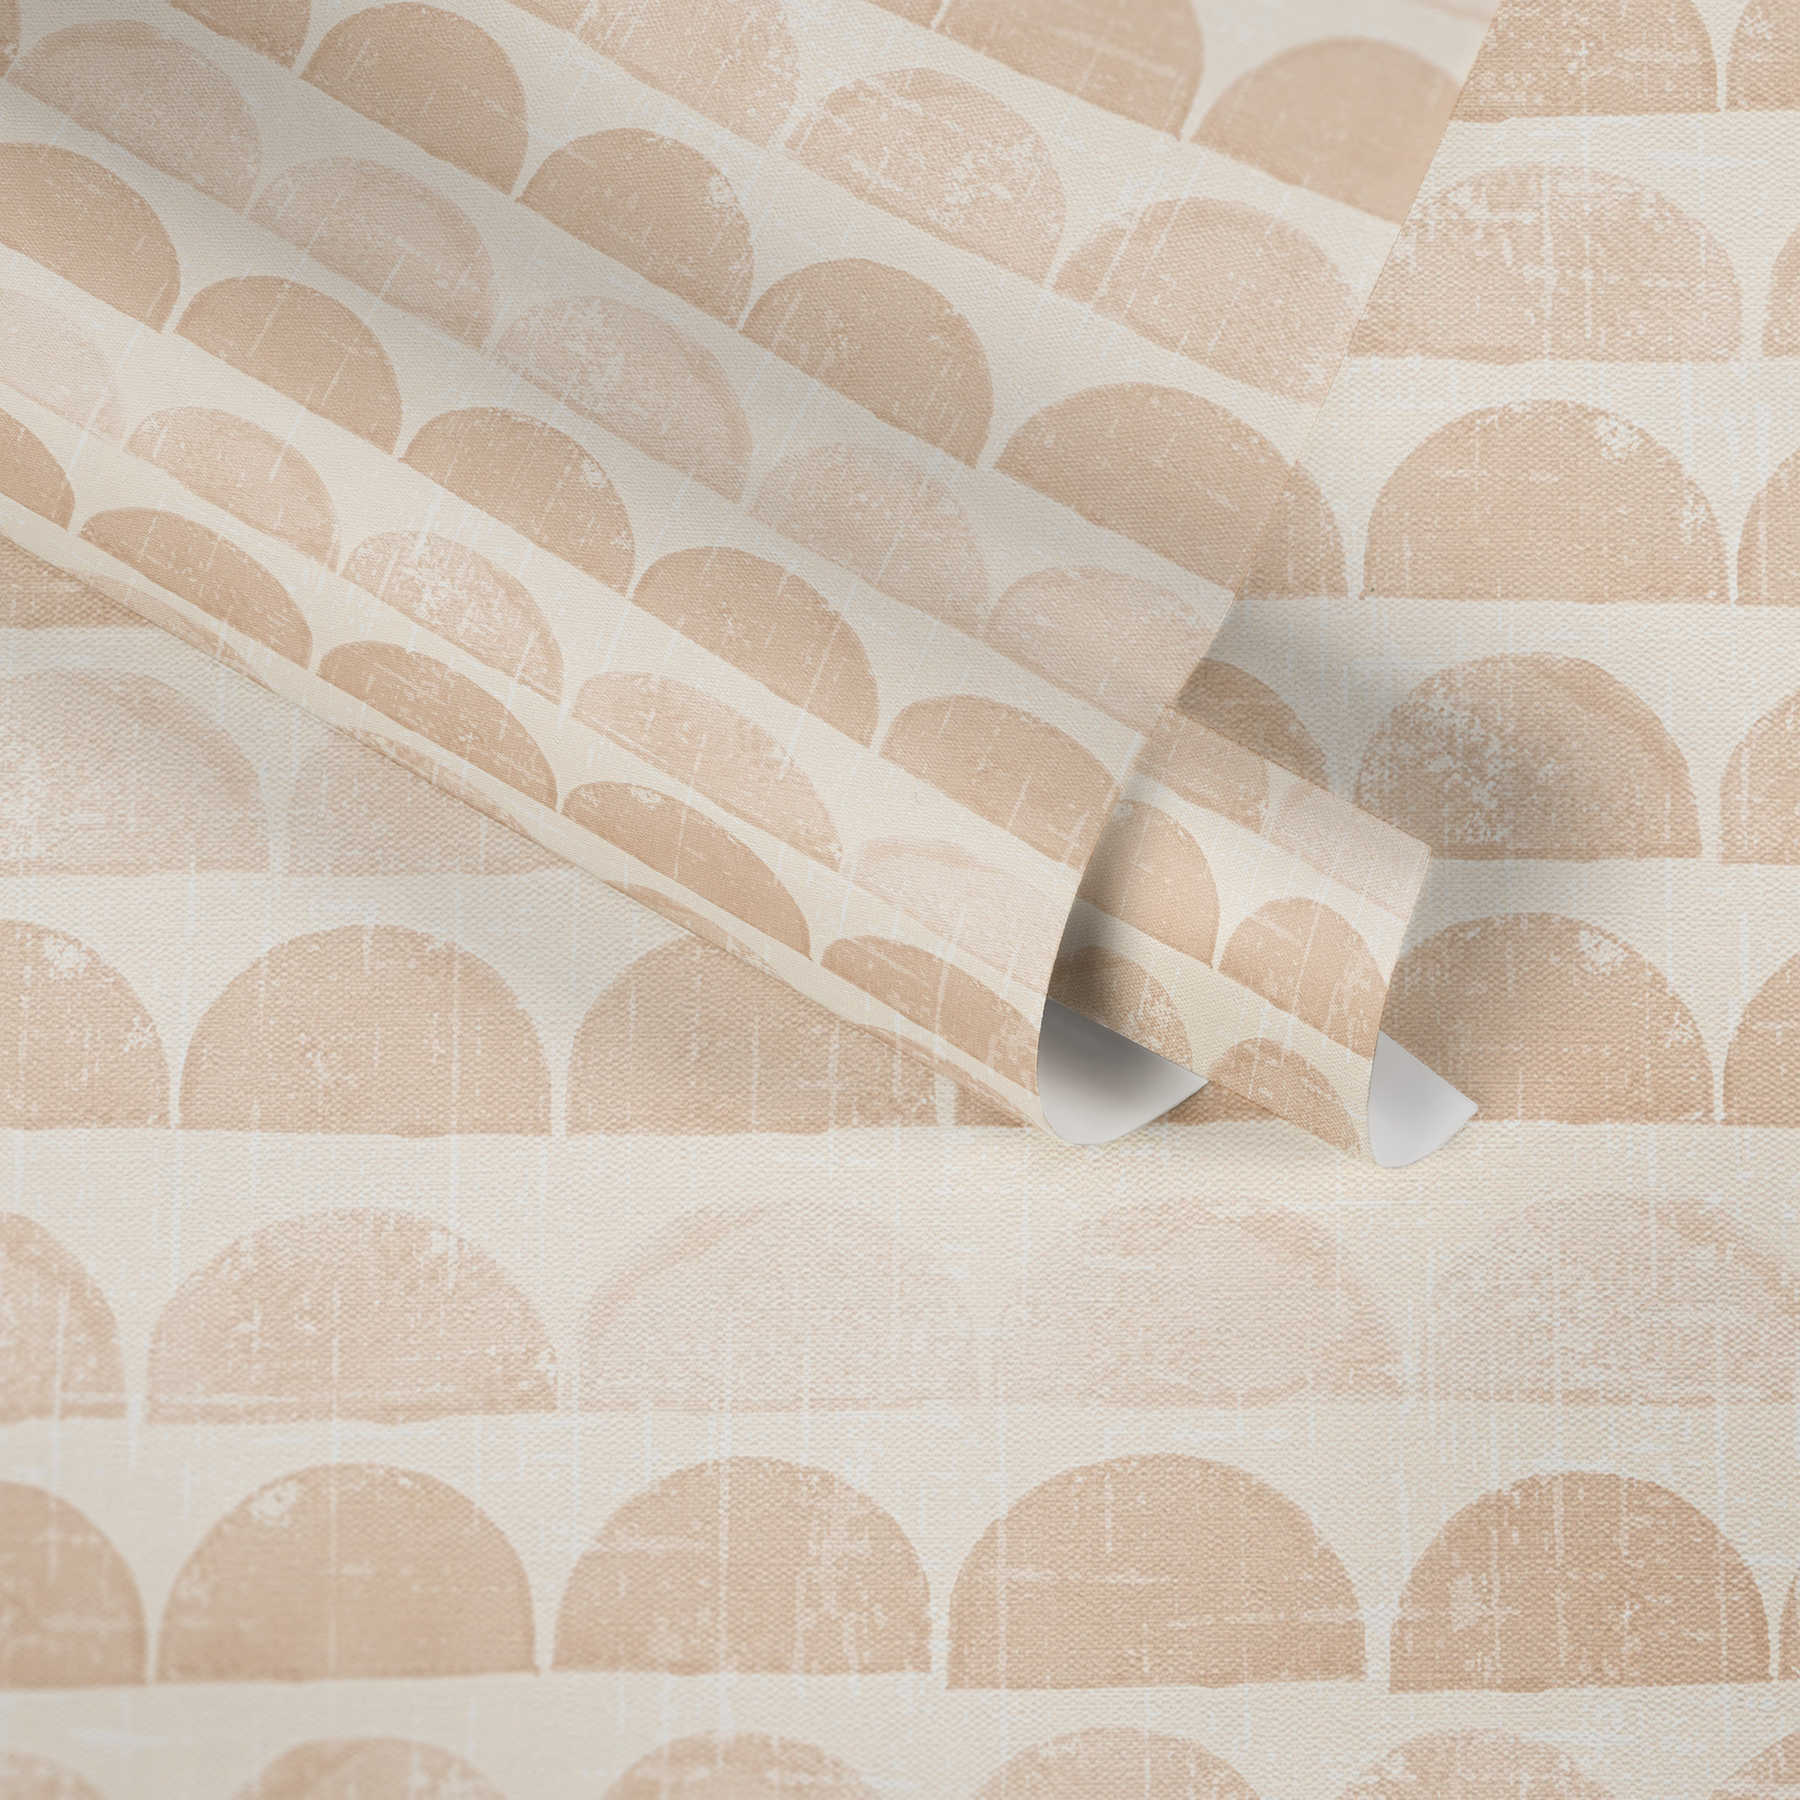             Scandinavian design wallpaper semicircle pattern - beige, cream
        